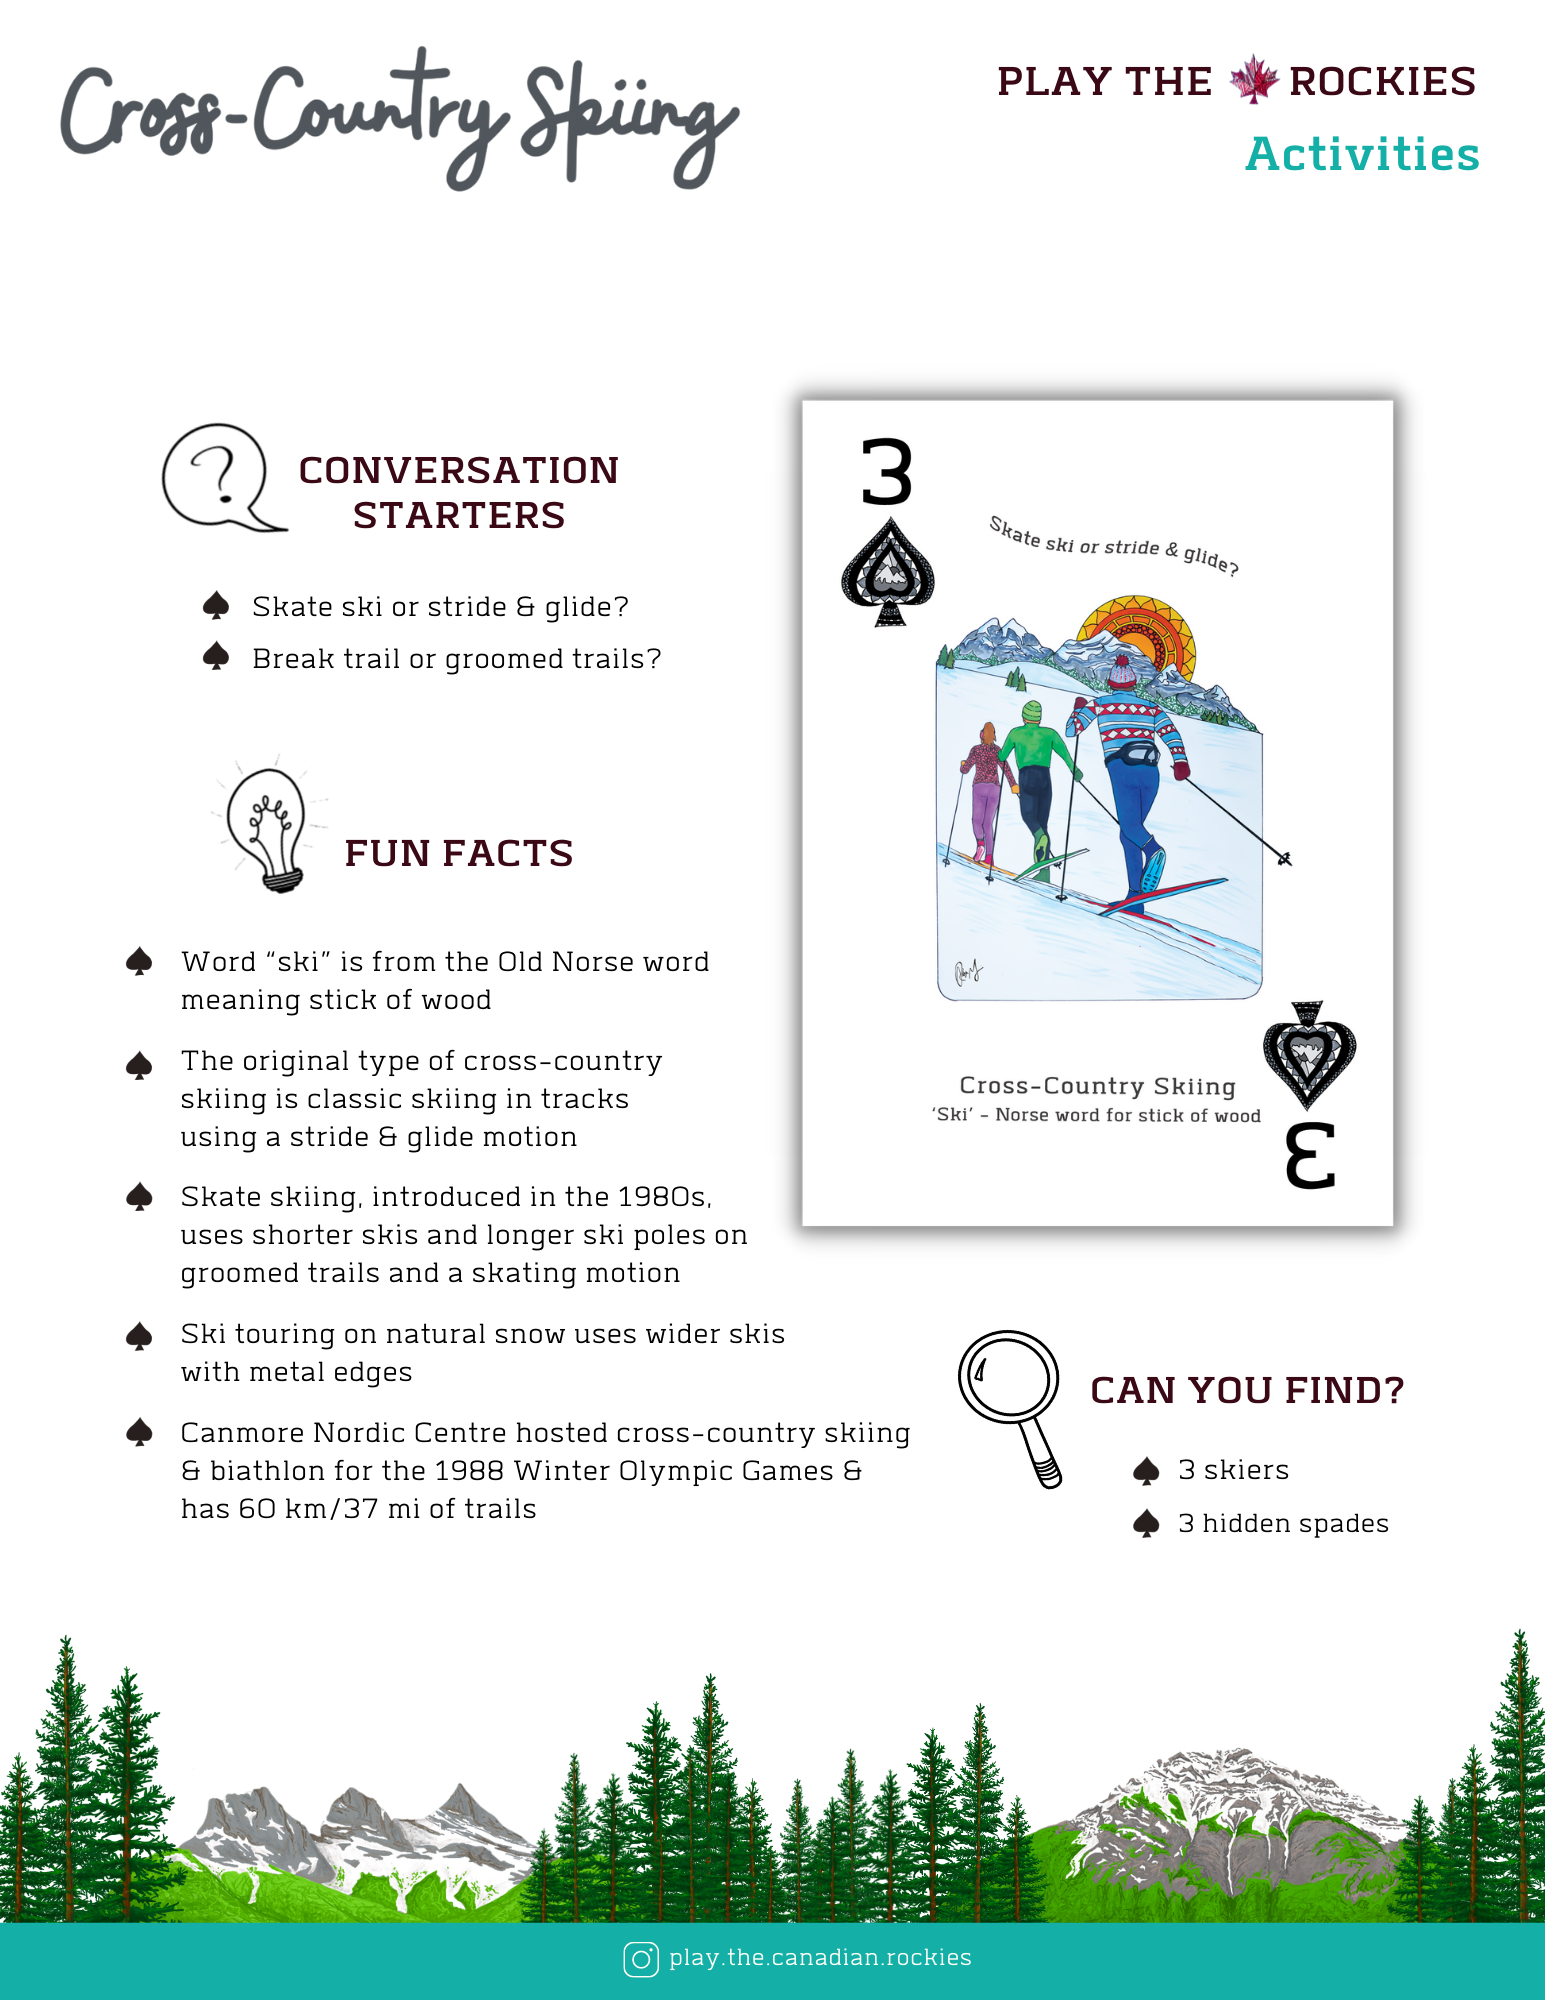 3 Cross-Country Skiing - Activities - Information Sheet